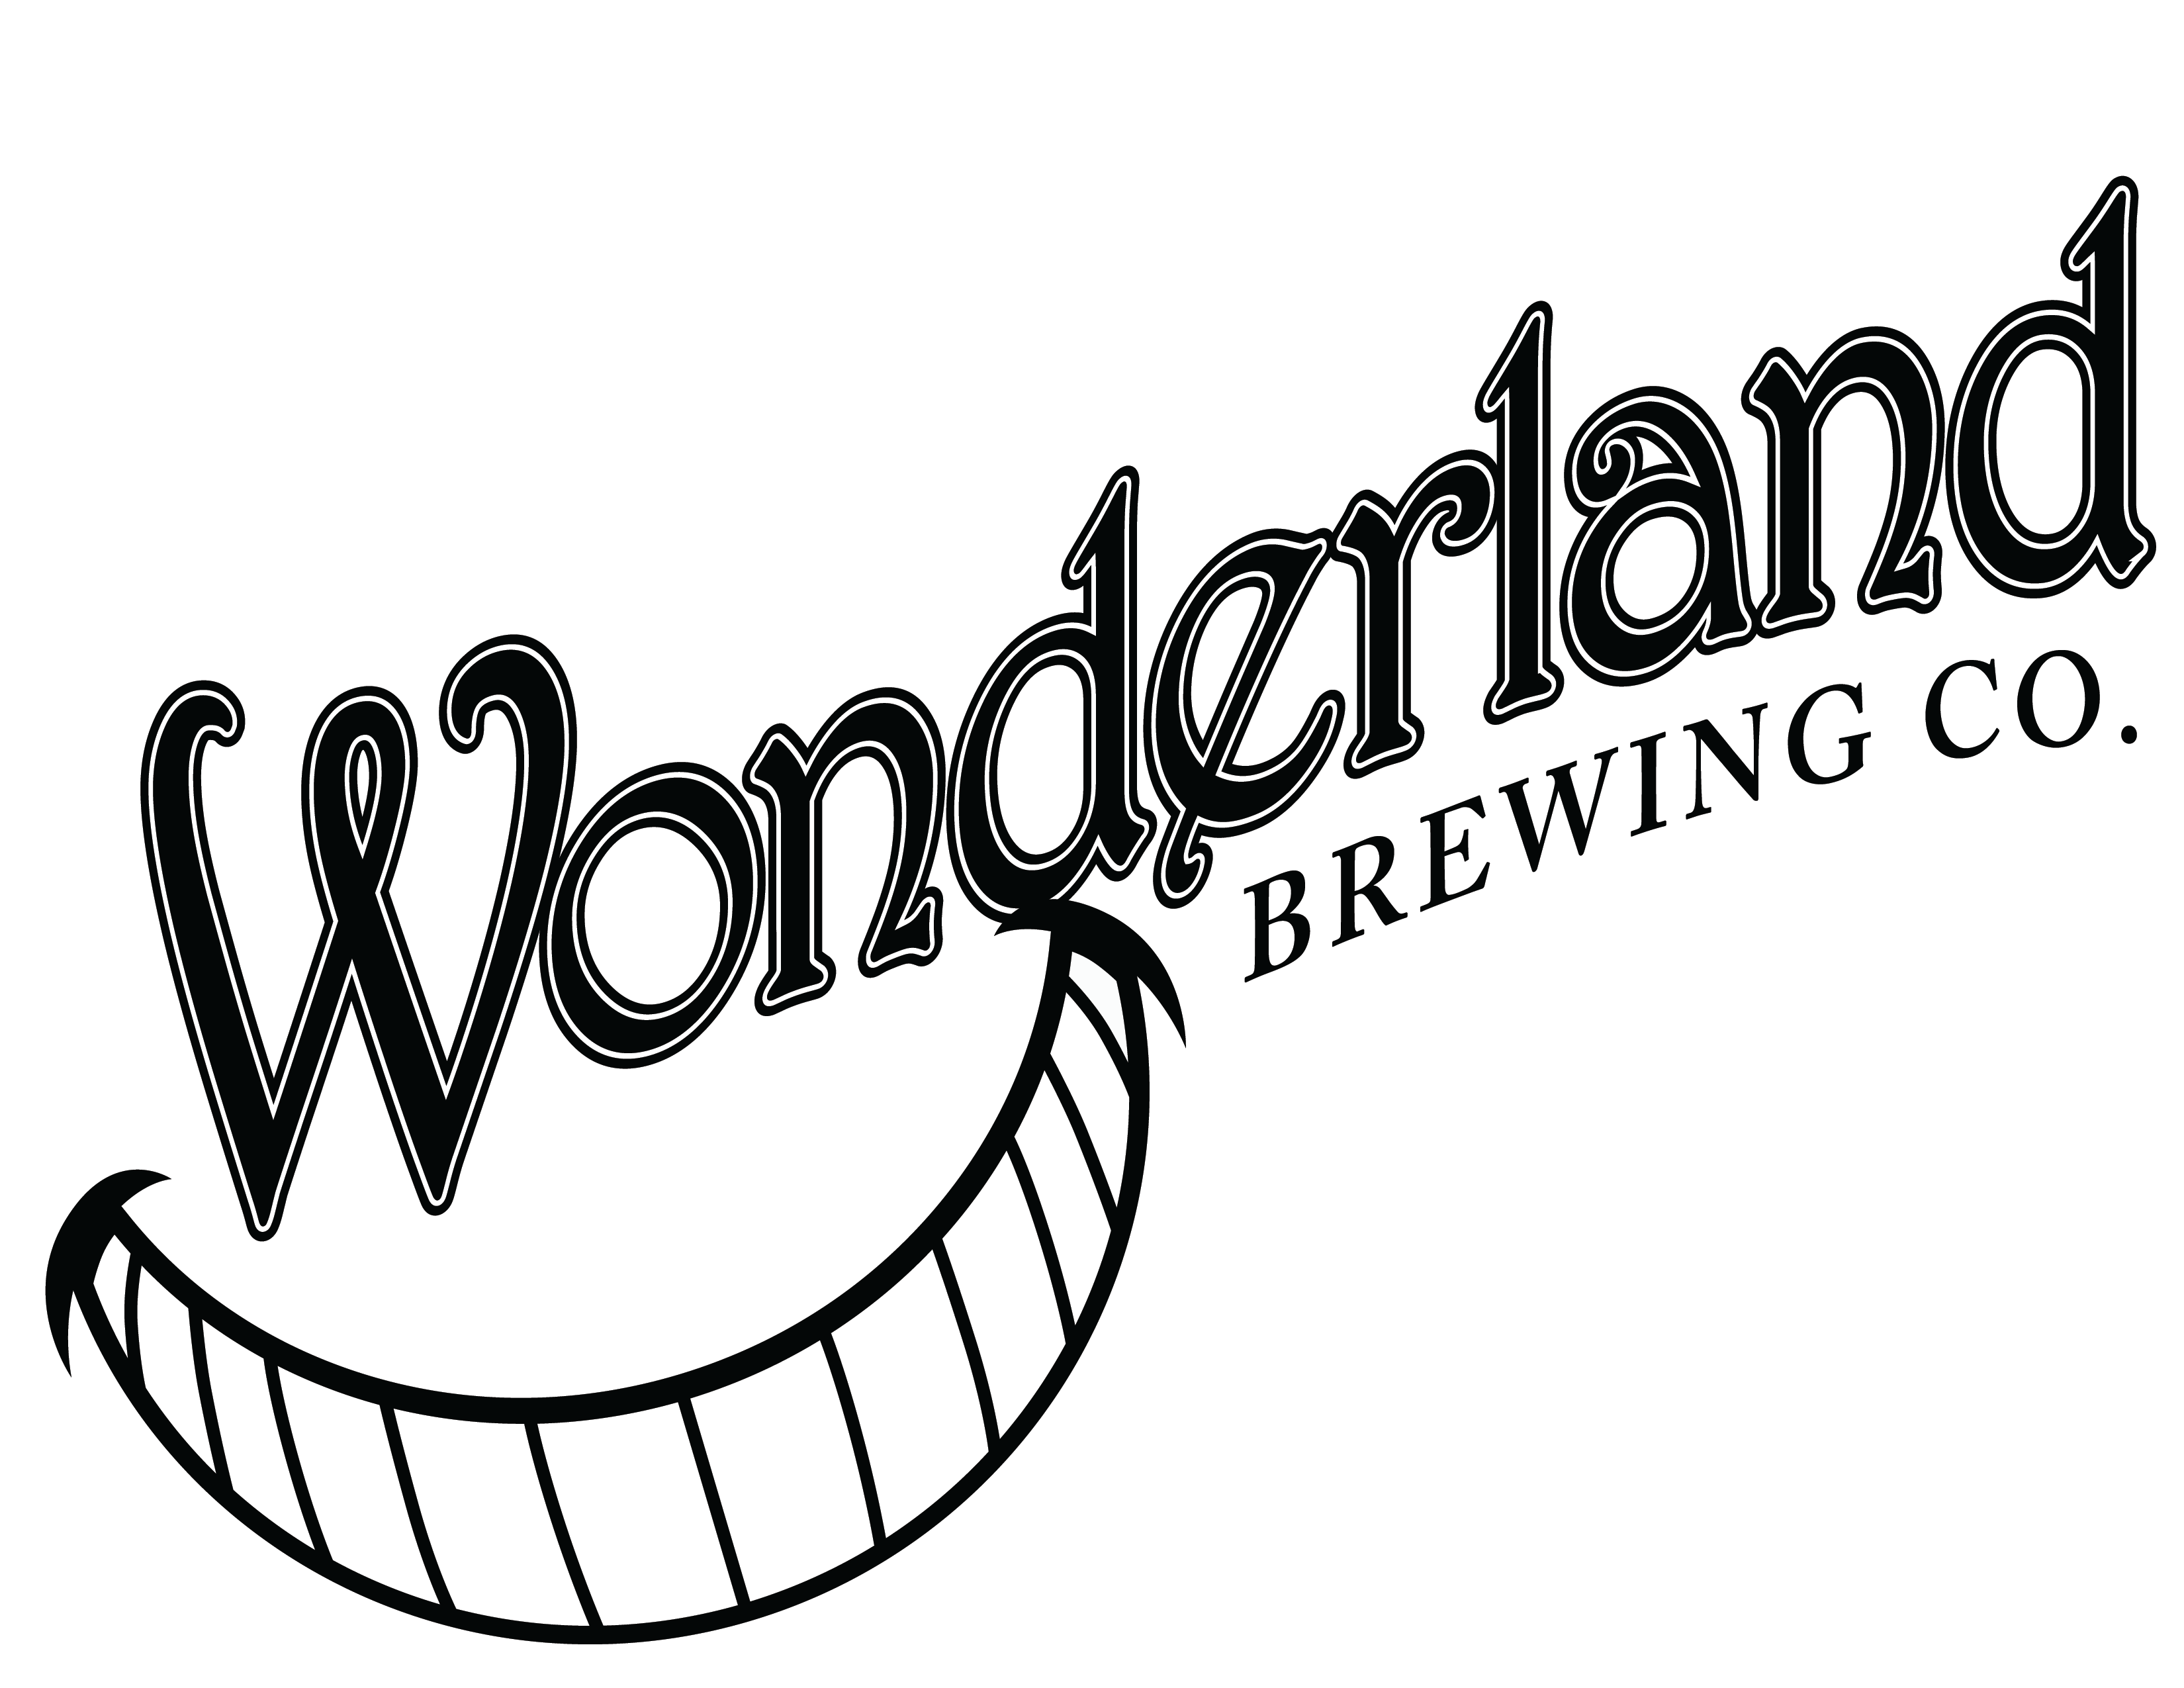 Wonderland Brewing Company